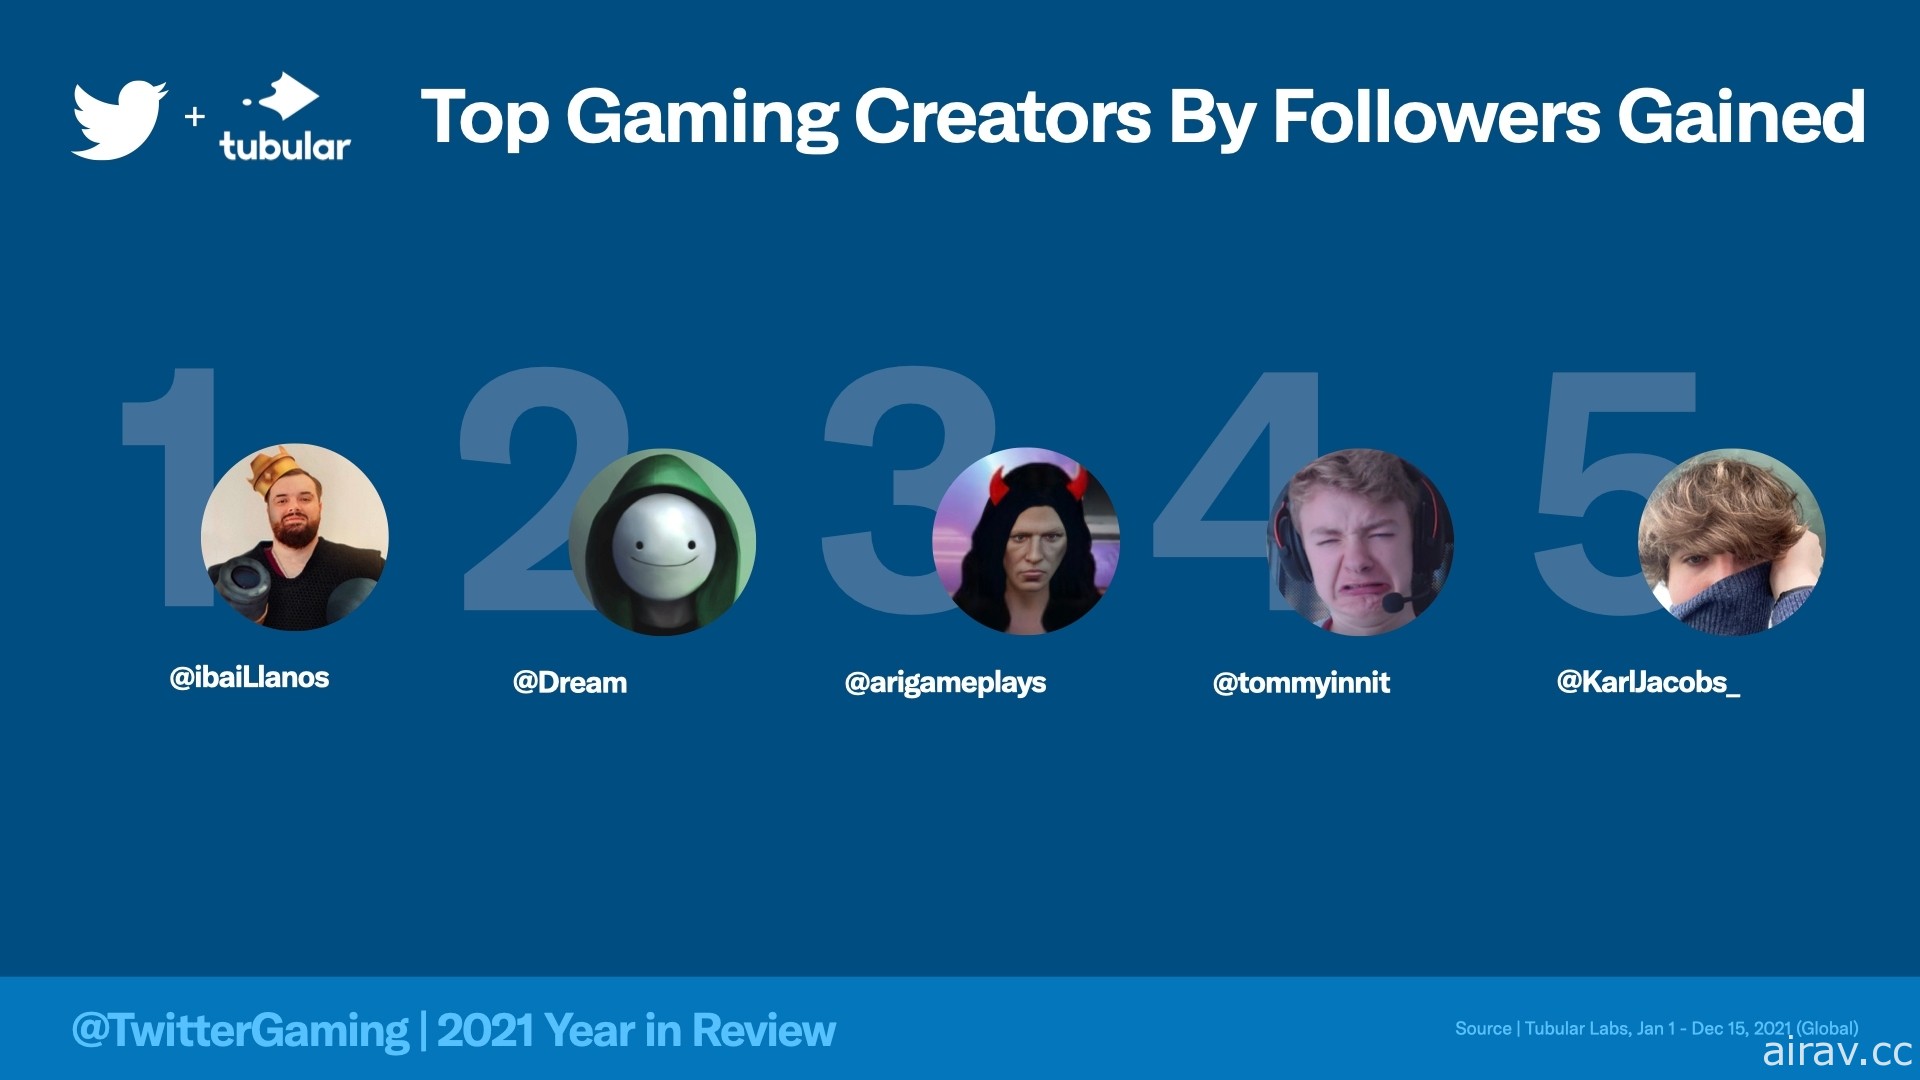 Twitter 公開 2021 年全球遊戲趨勢話題 《原神》為最多推文之遊戲